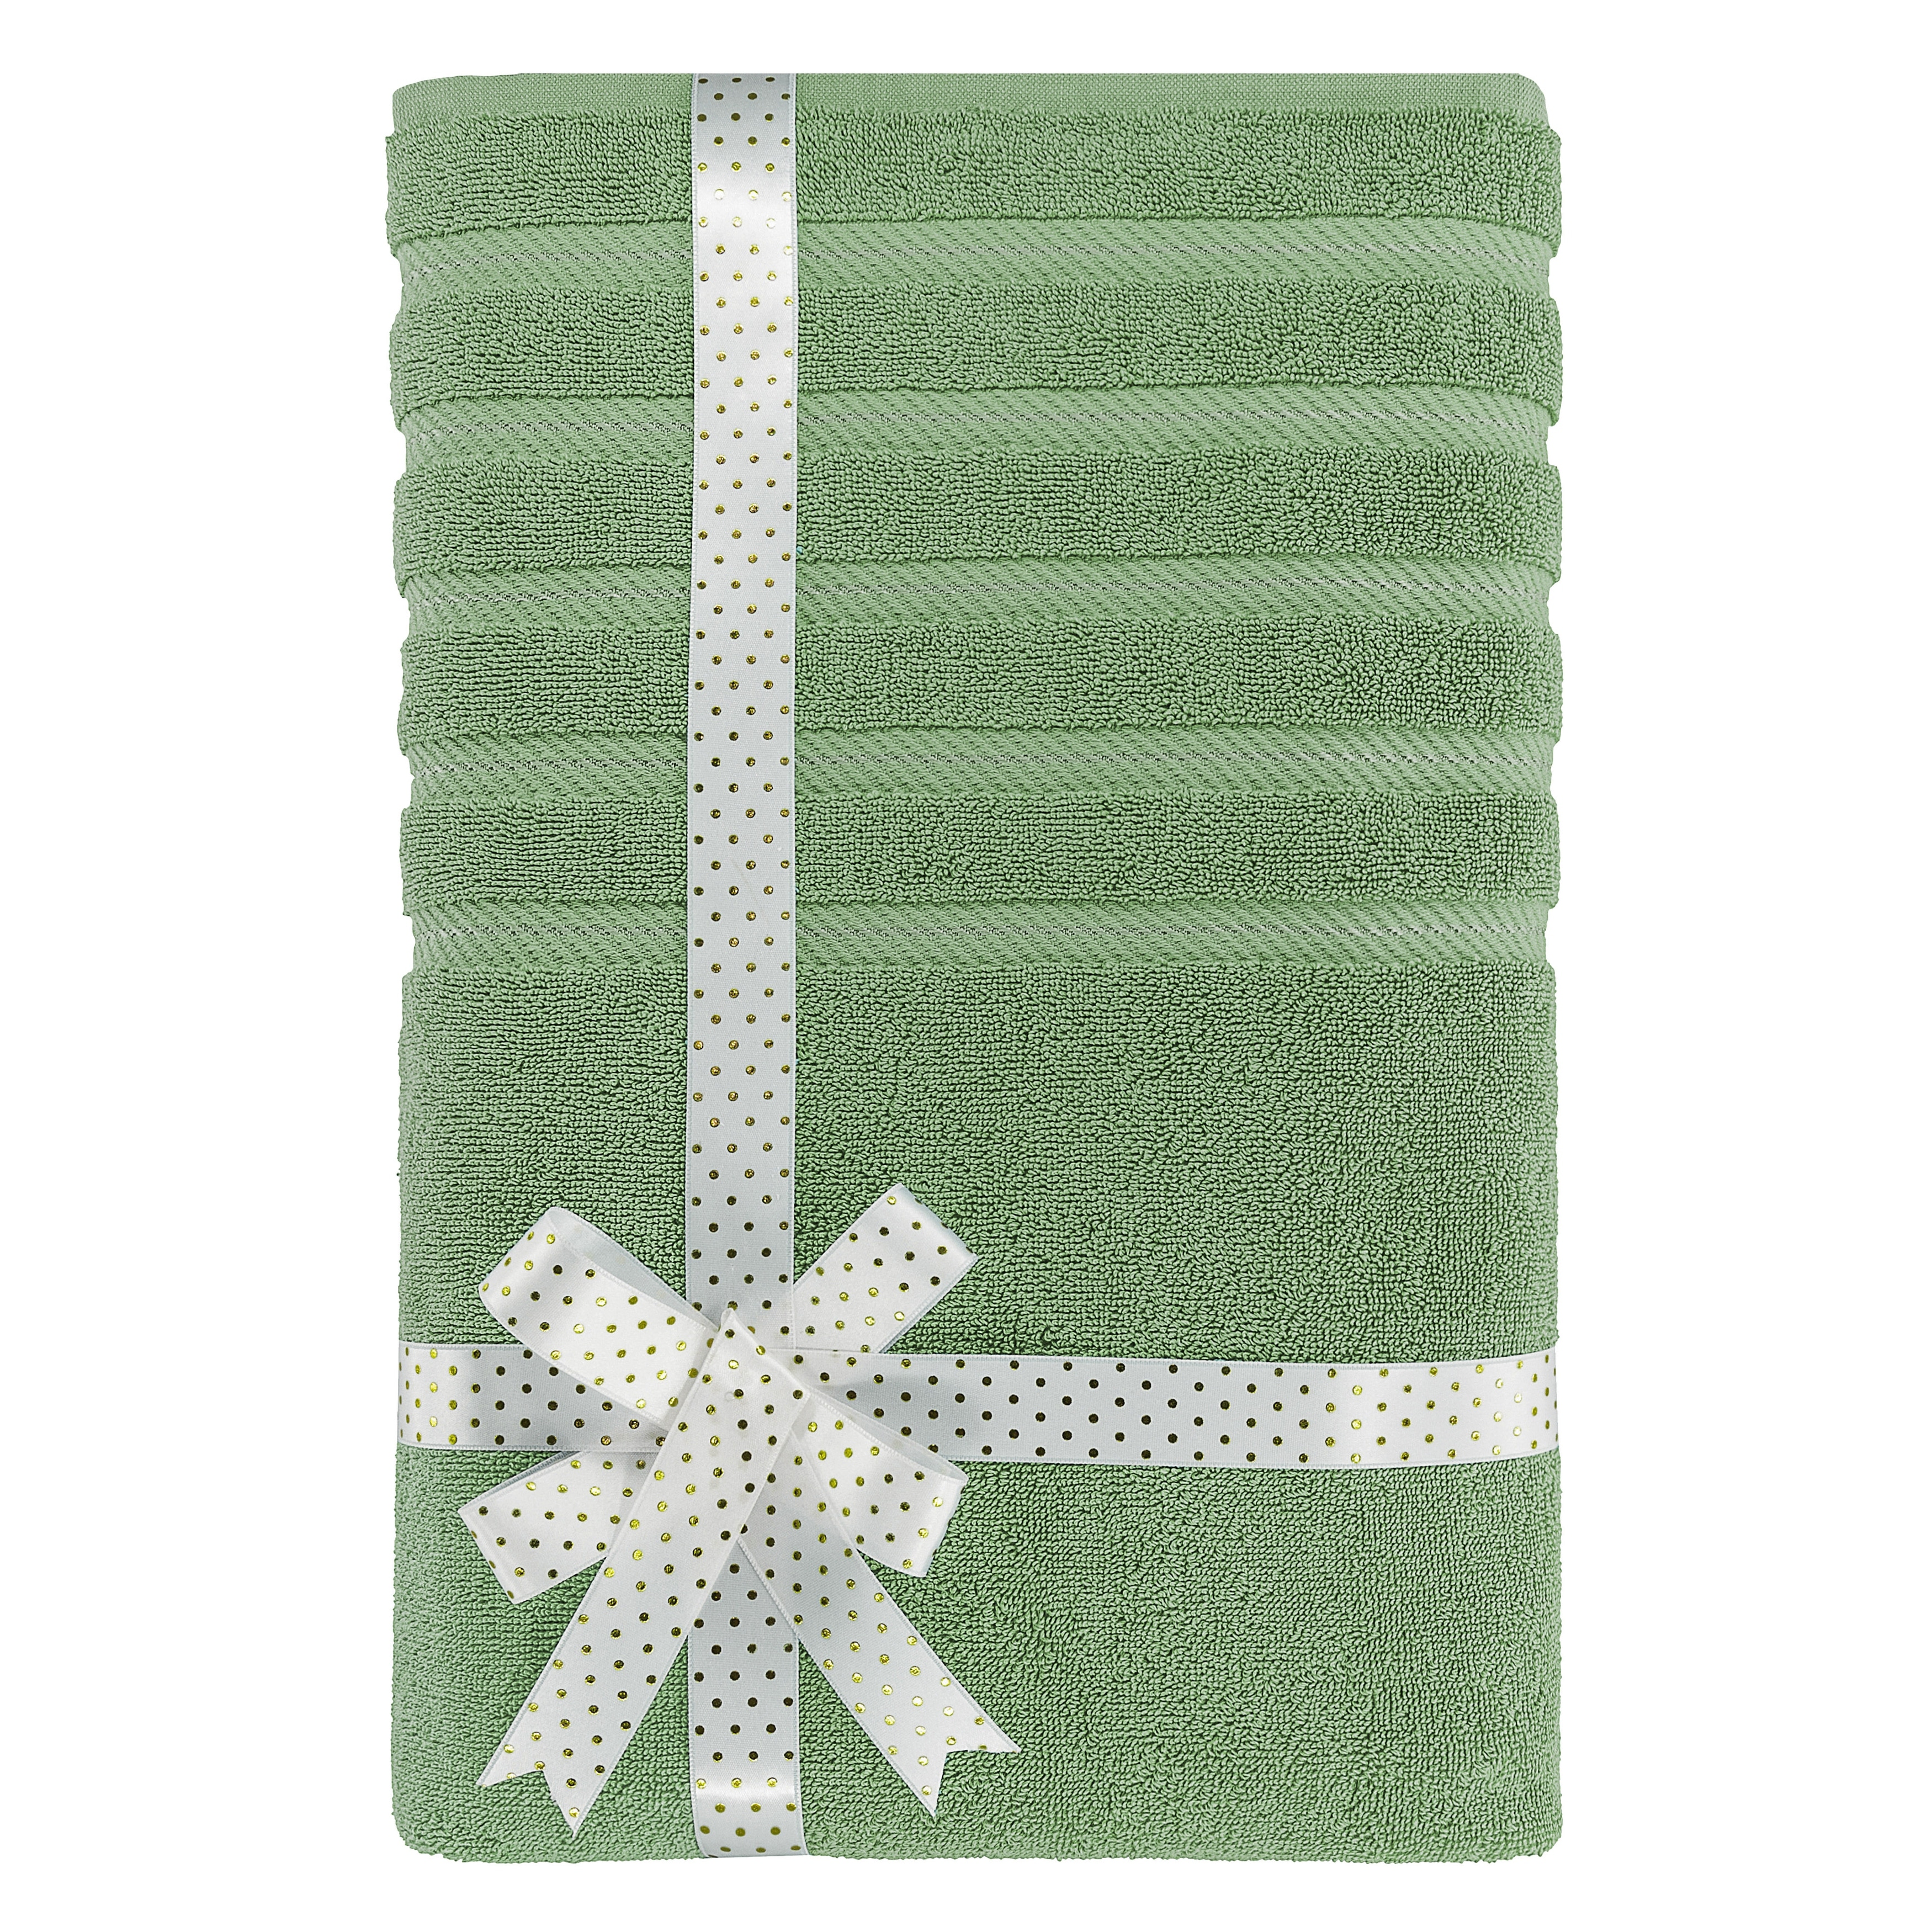 Bath Towels  Luxury & 100% Turkish Cotton - American Soft Linen